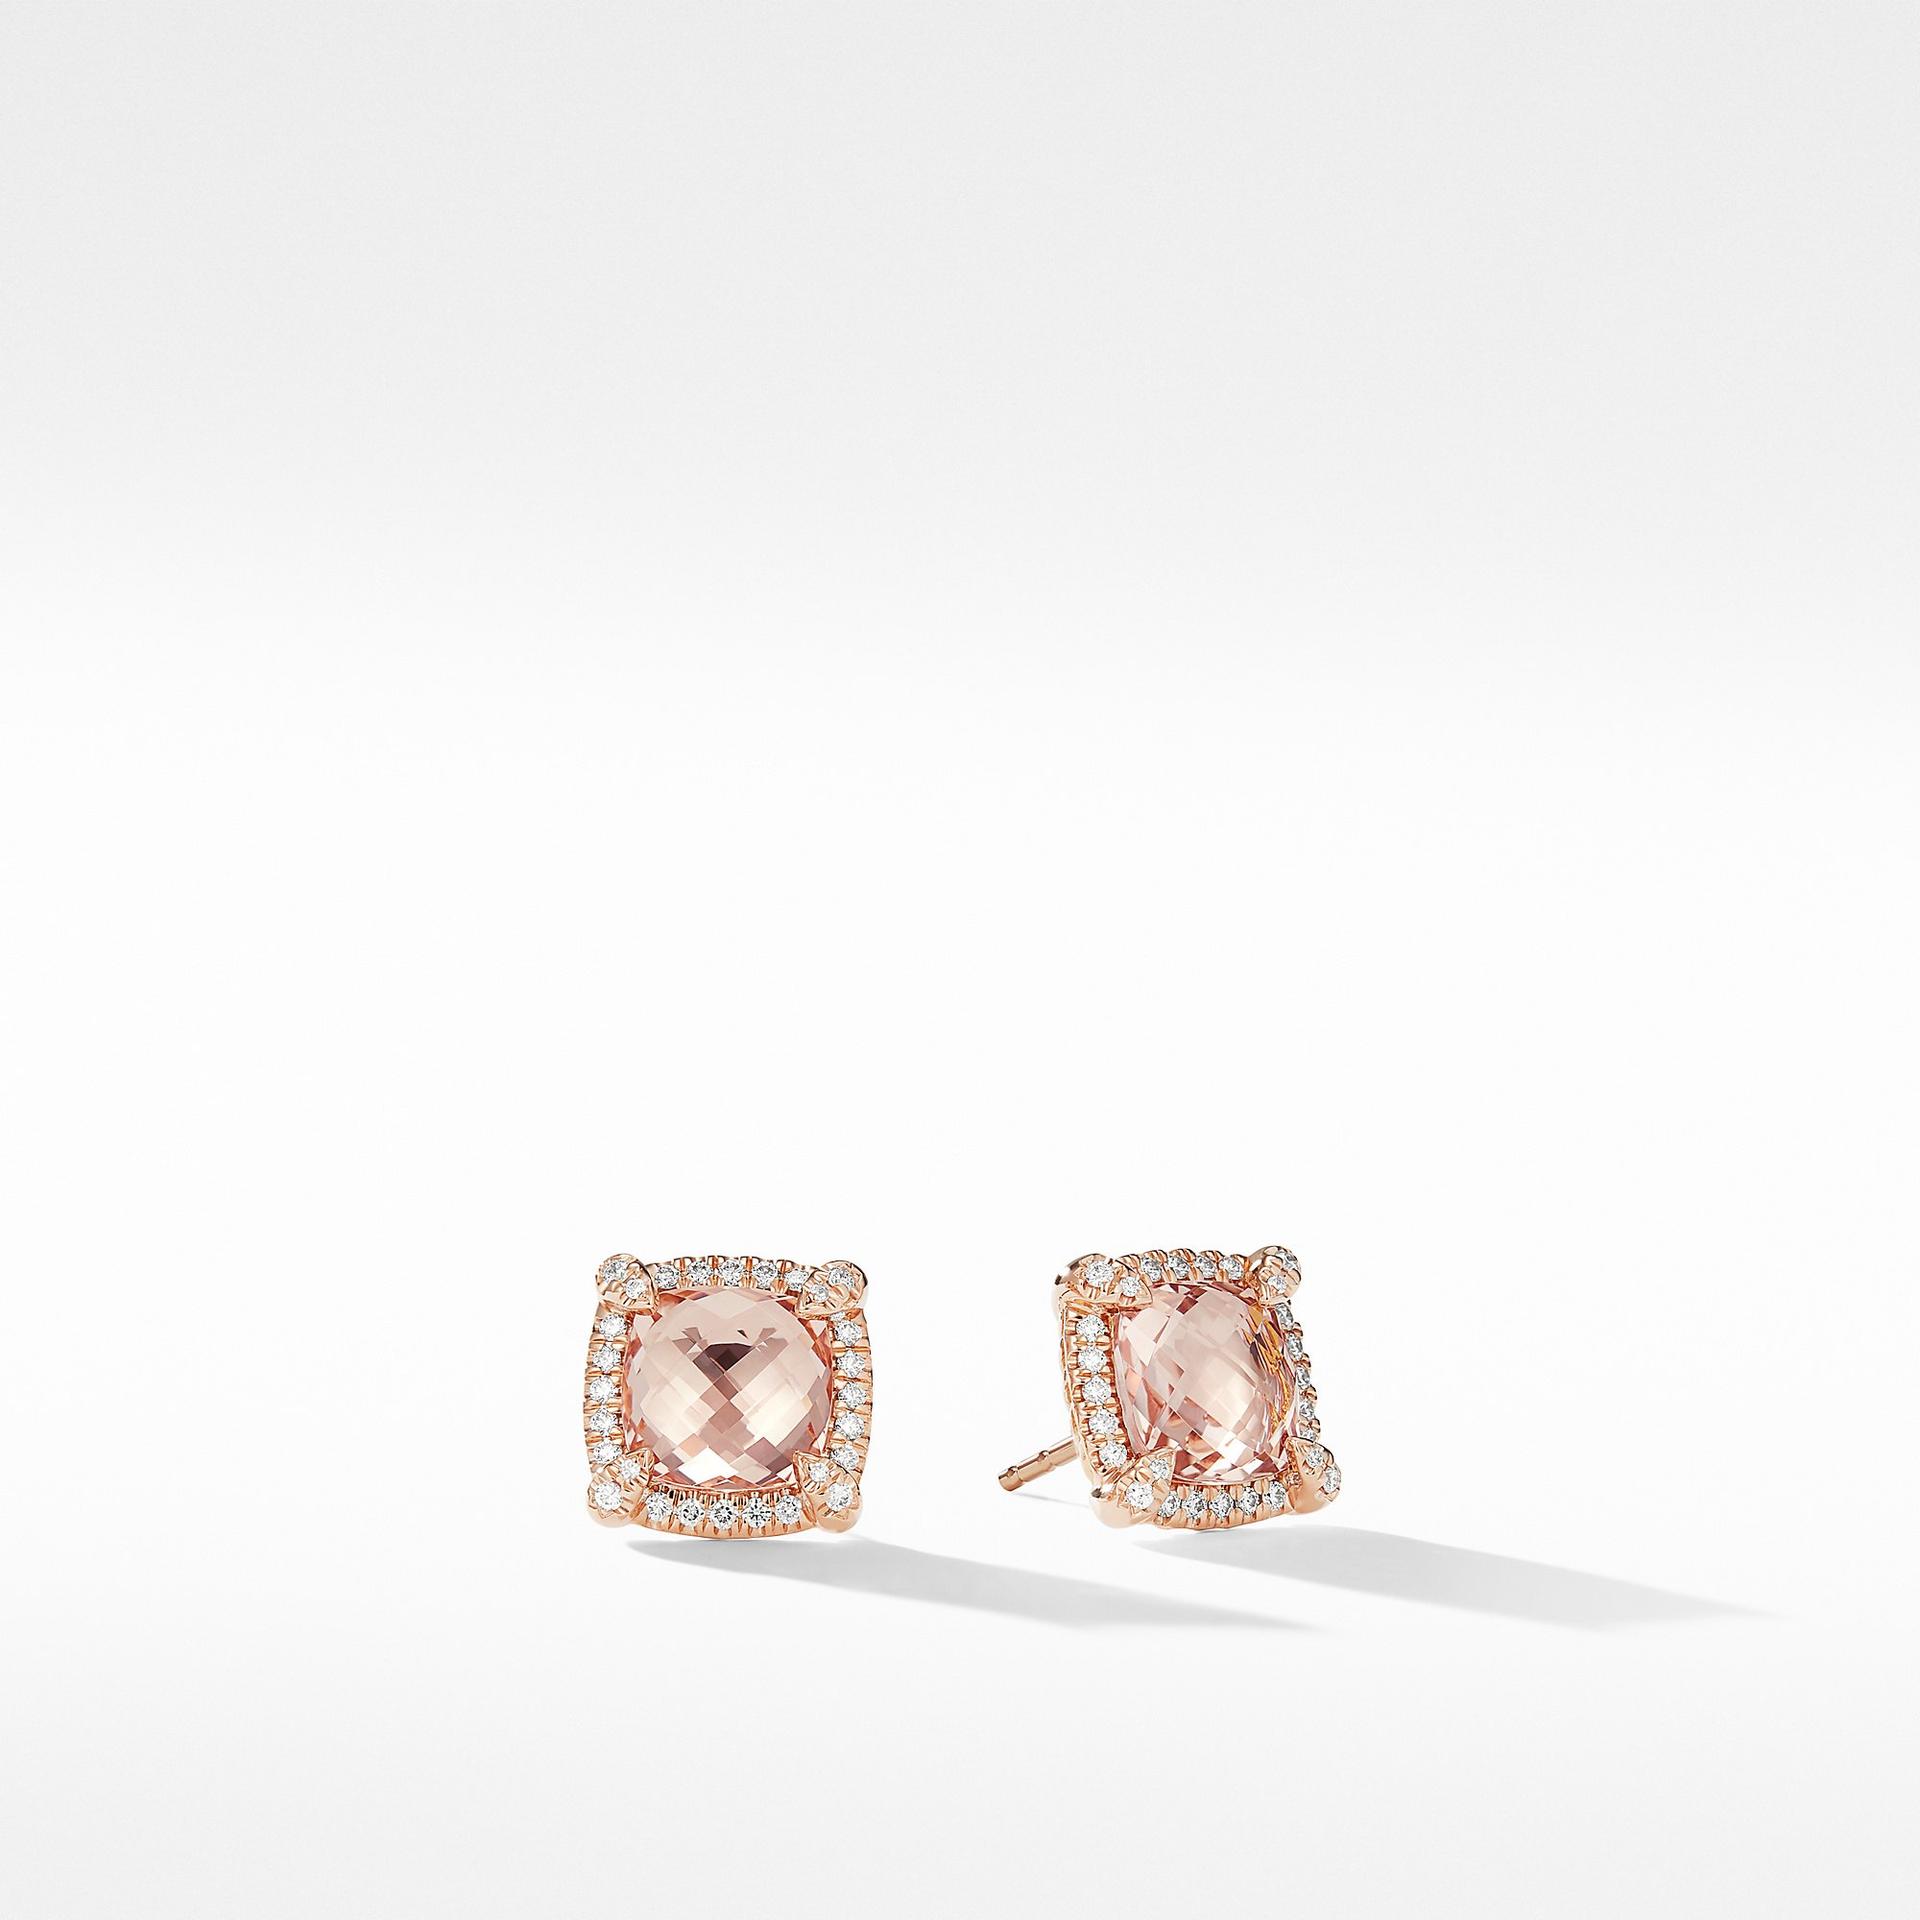 David Yurman Chatelaine Pave Bezel Stud Earrings in 18K Rose Gold with Morganite 0